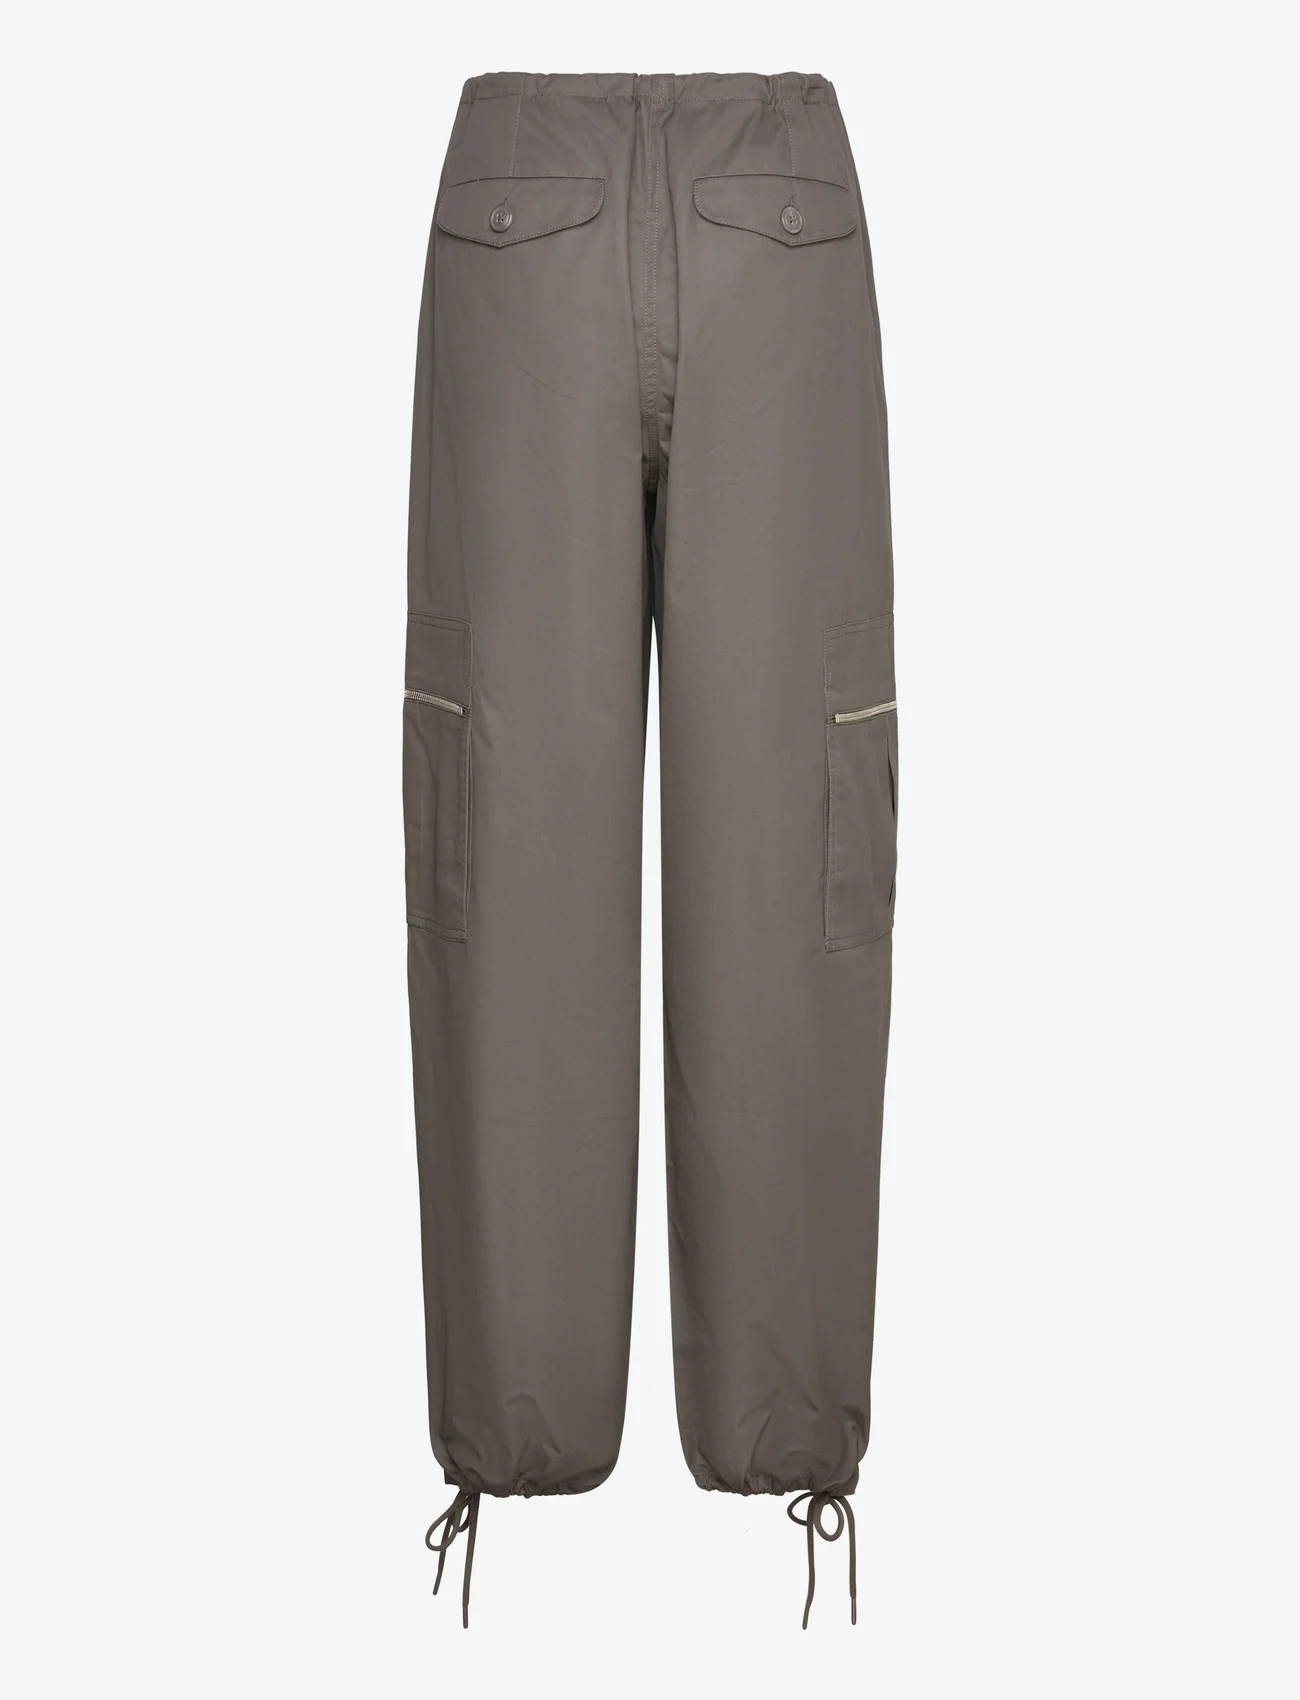 Samsøe Samsøe - Chi trousers 14906 - cargo pants - major brown - 1